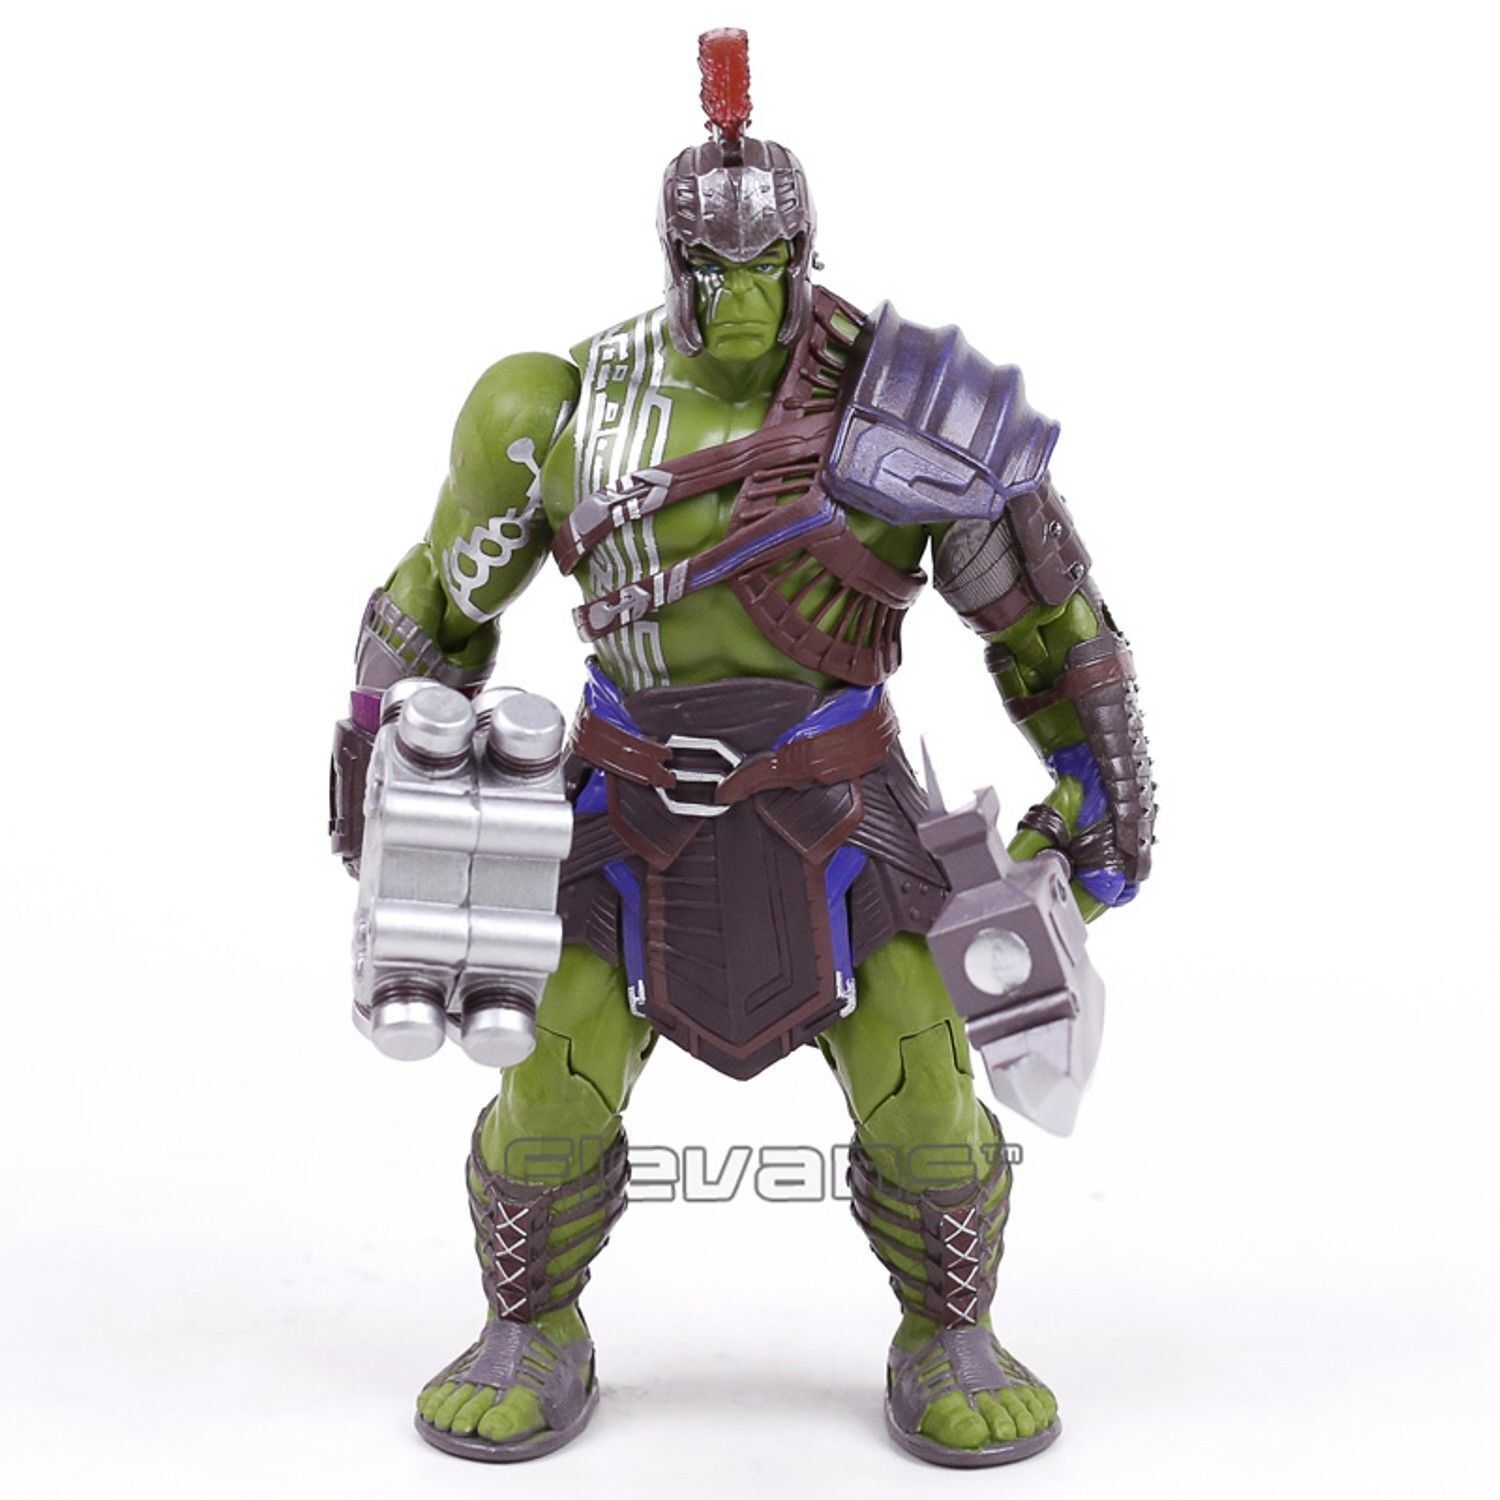 Diamond Marvel Select Thor: Ragnarok Gladiator Hulk 9 Action Figure - Ships Now